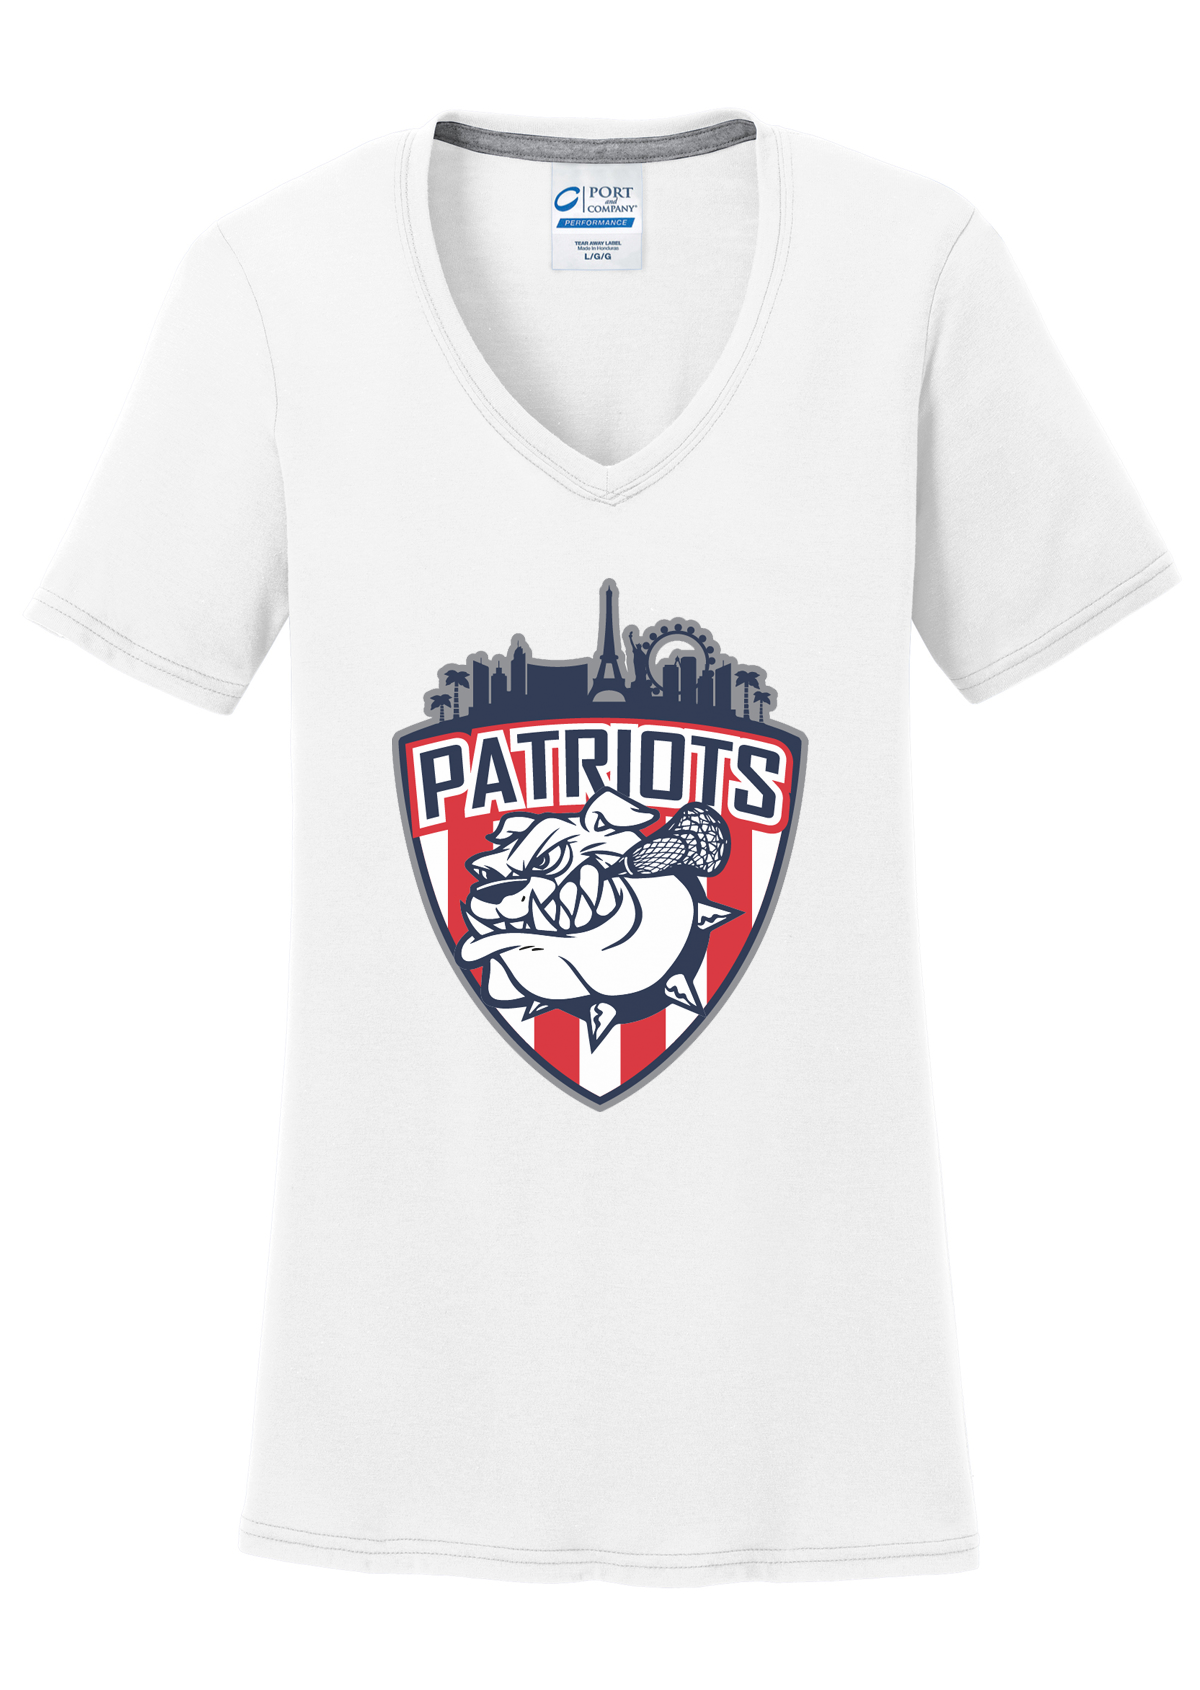 Las Vegas Patriots Women's White T-Shirt